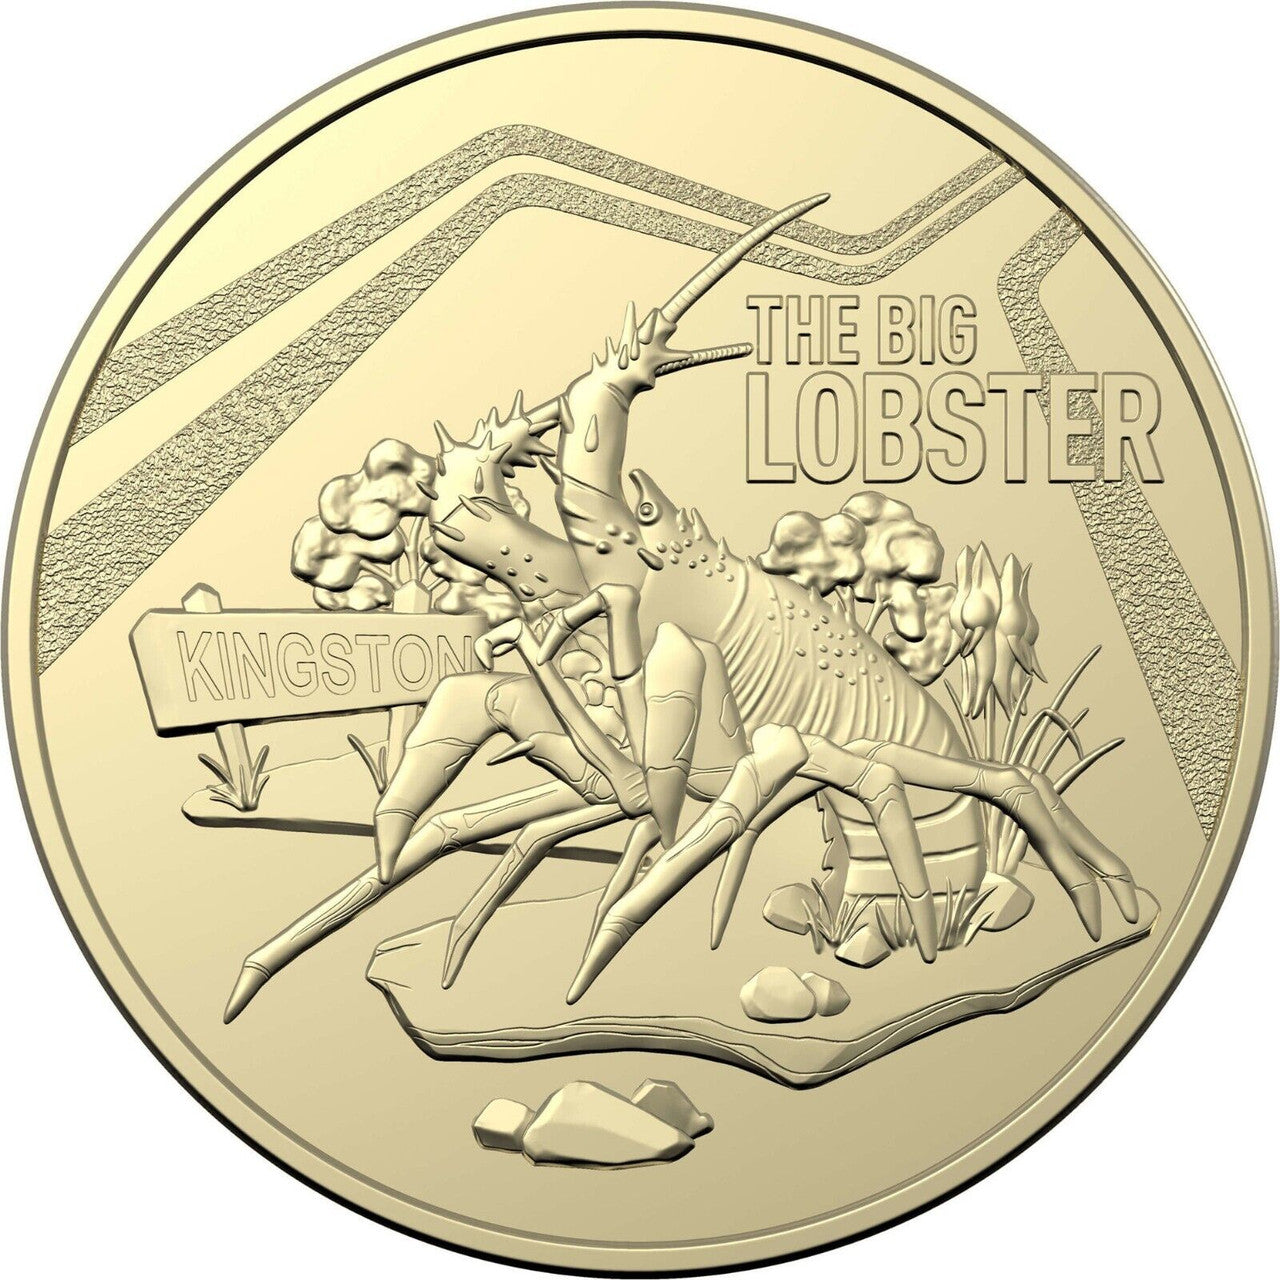 Royal Australian Mint Aussie Big Things The Big Lobster 2023 PNC